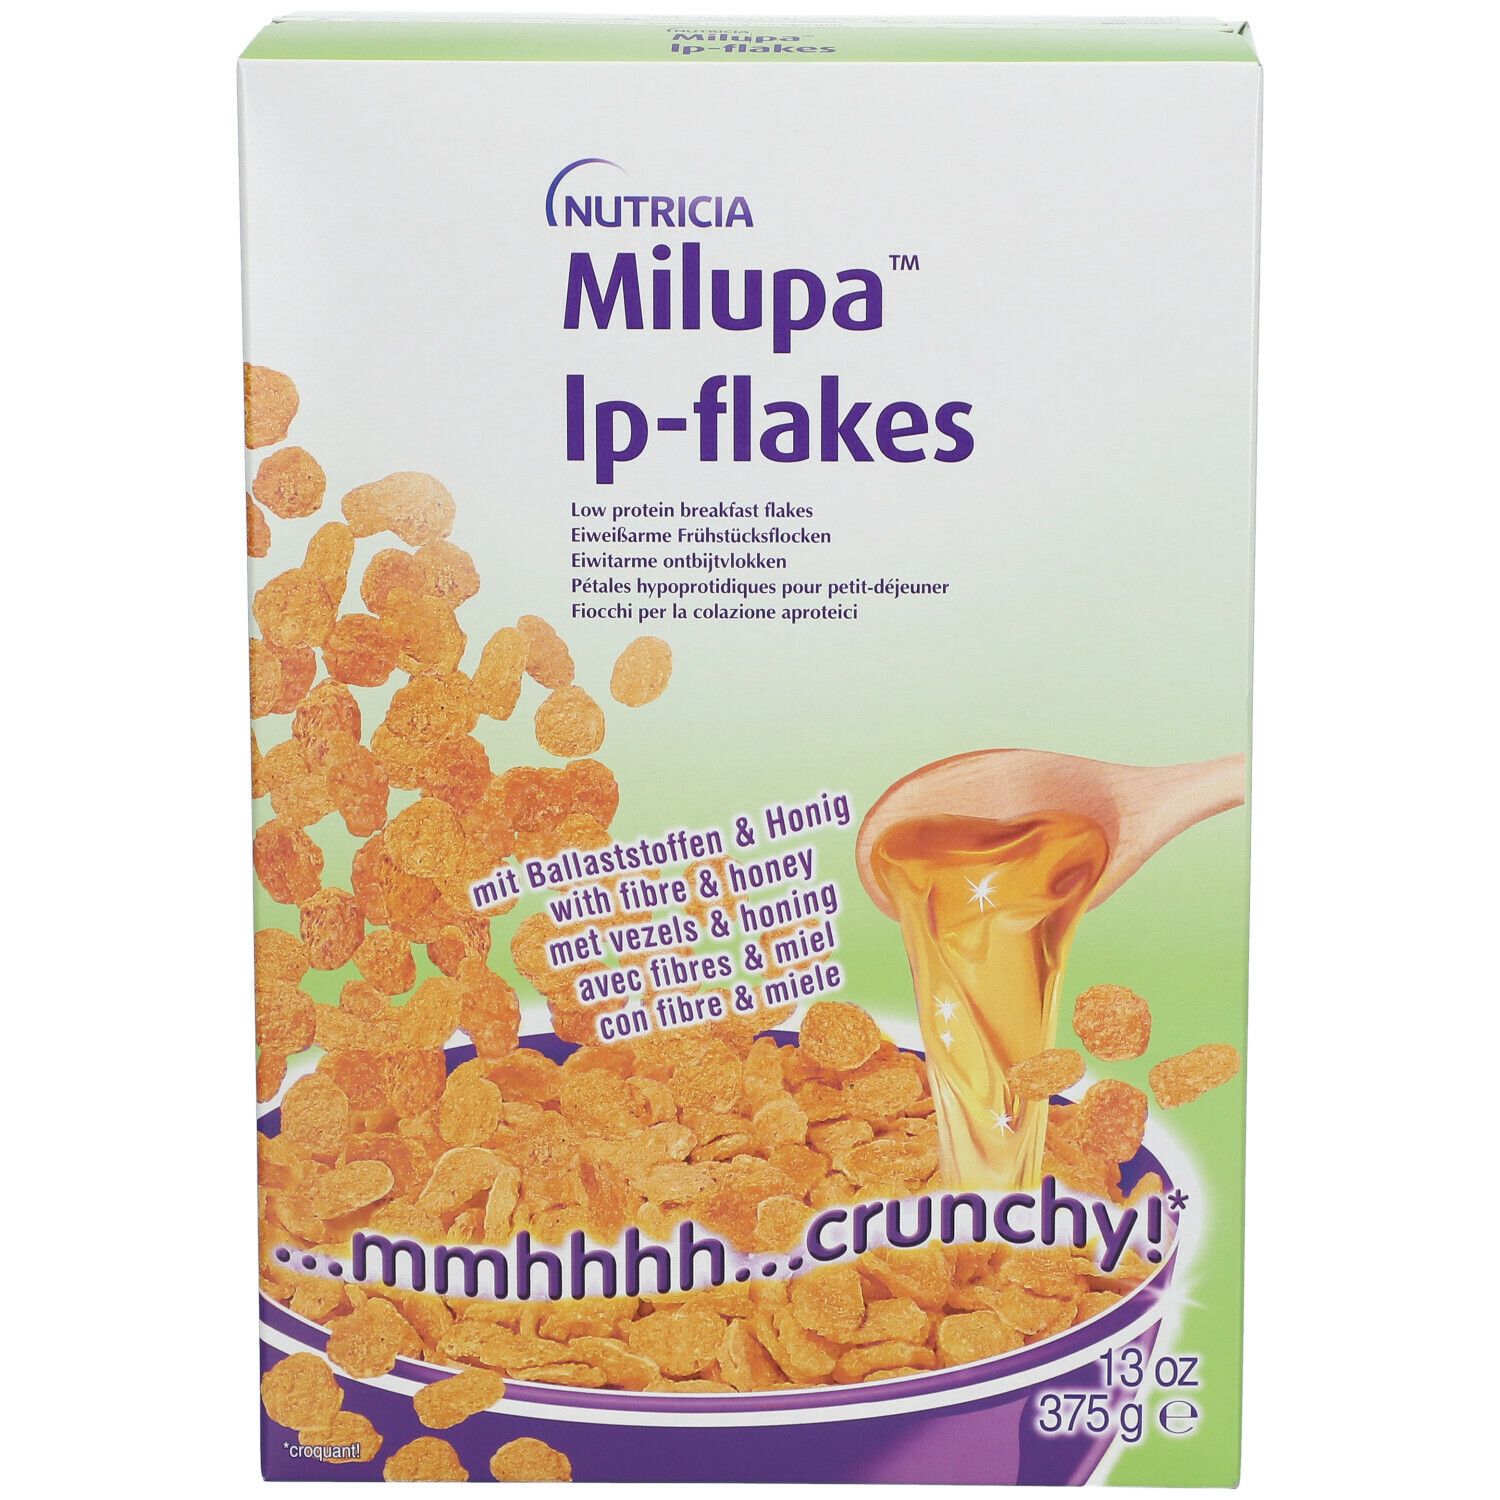 Milupa Lp-Flakes Cereali